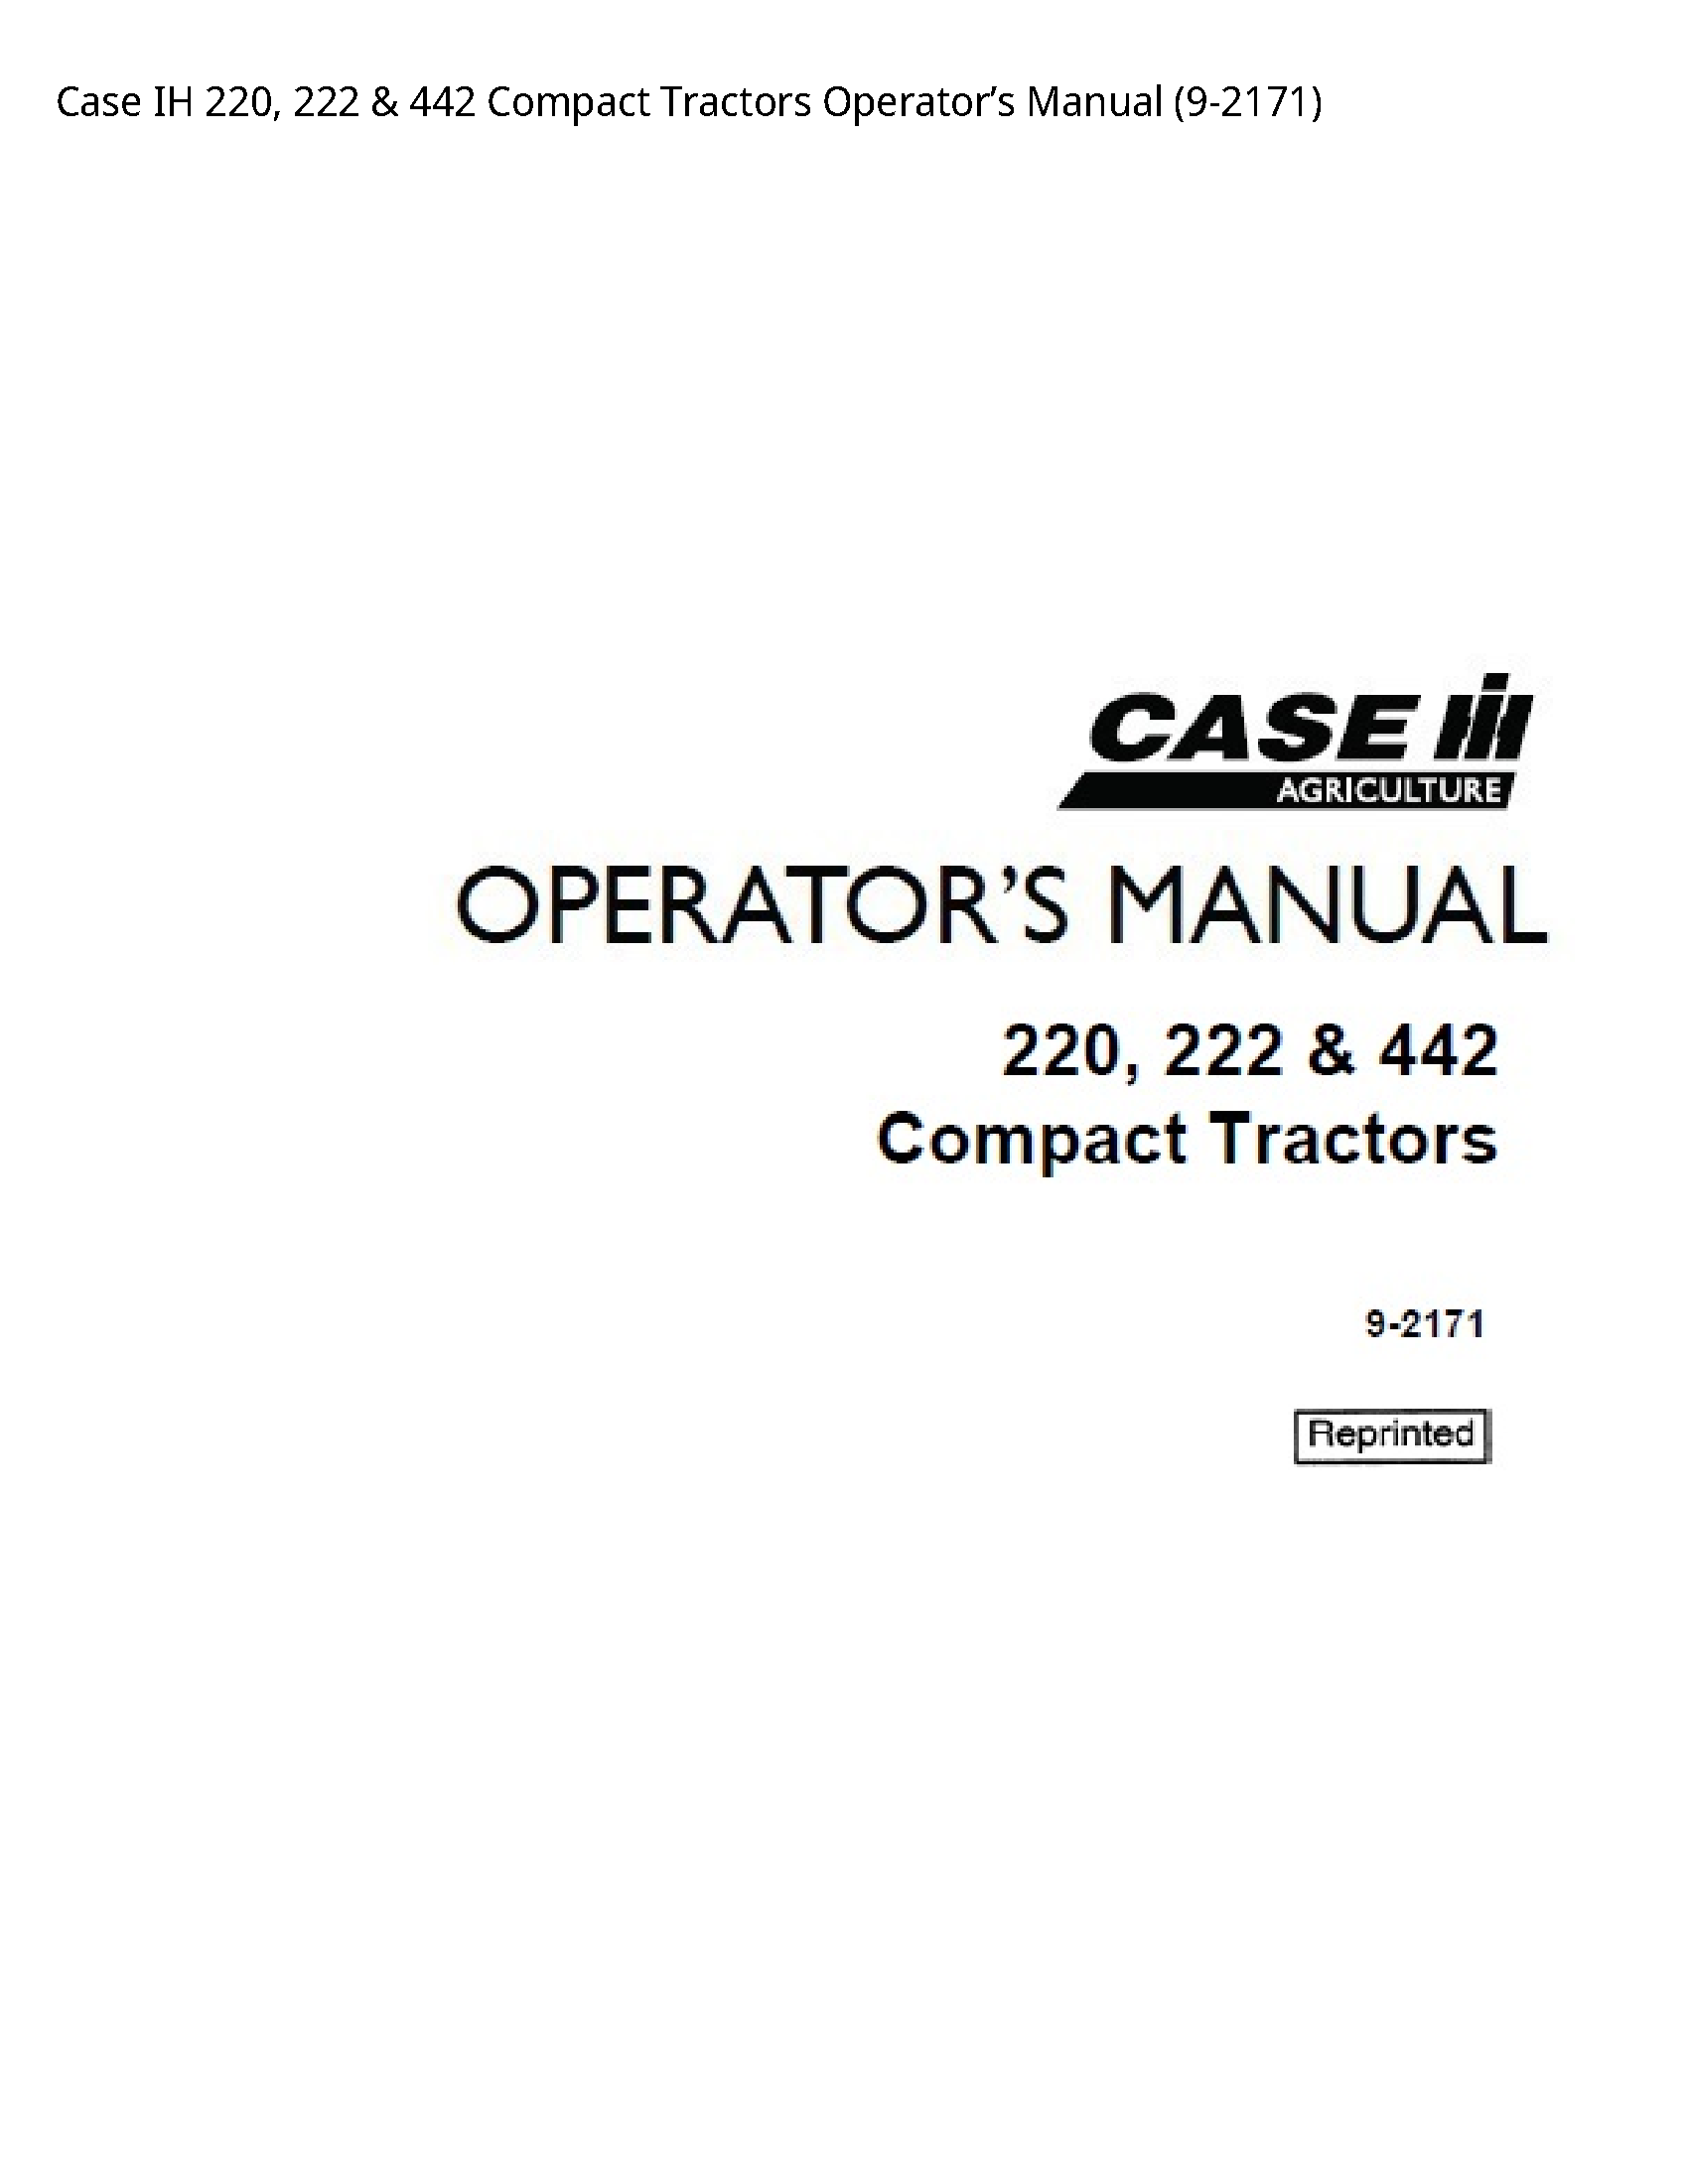 Case/Case IH 220 IH Compact Tractors Operator’s manual